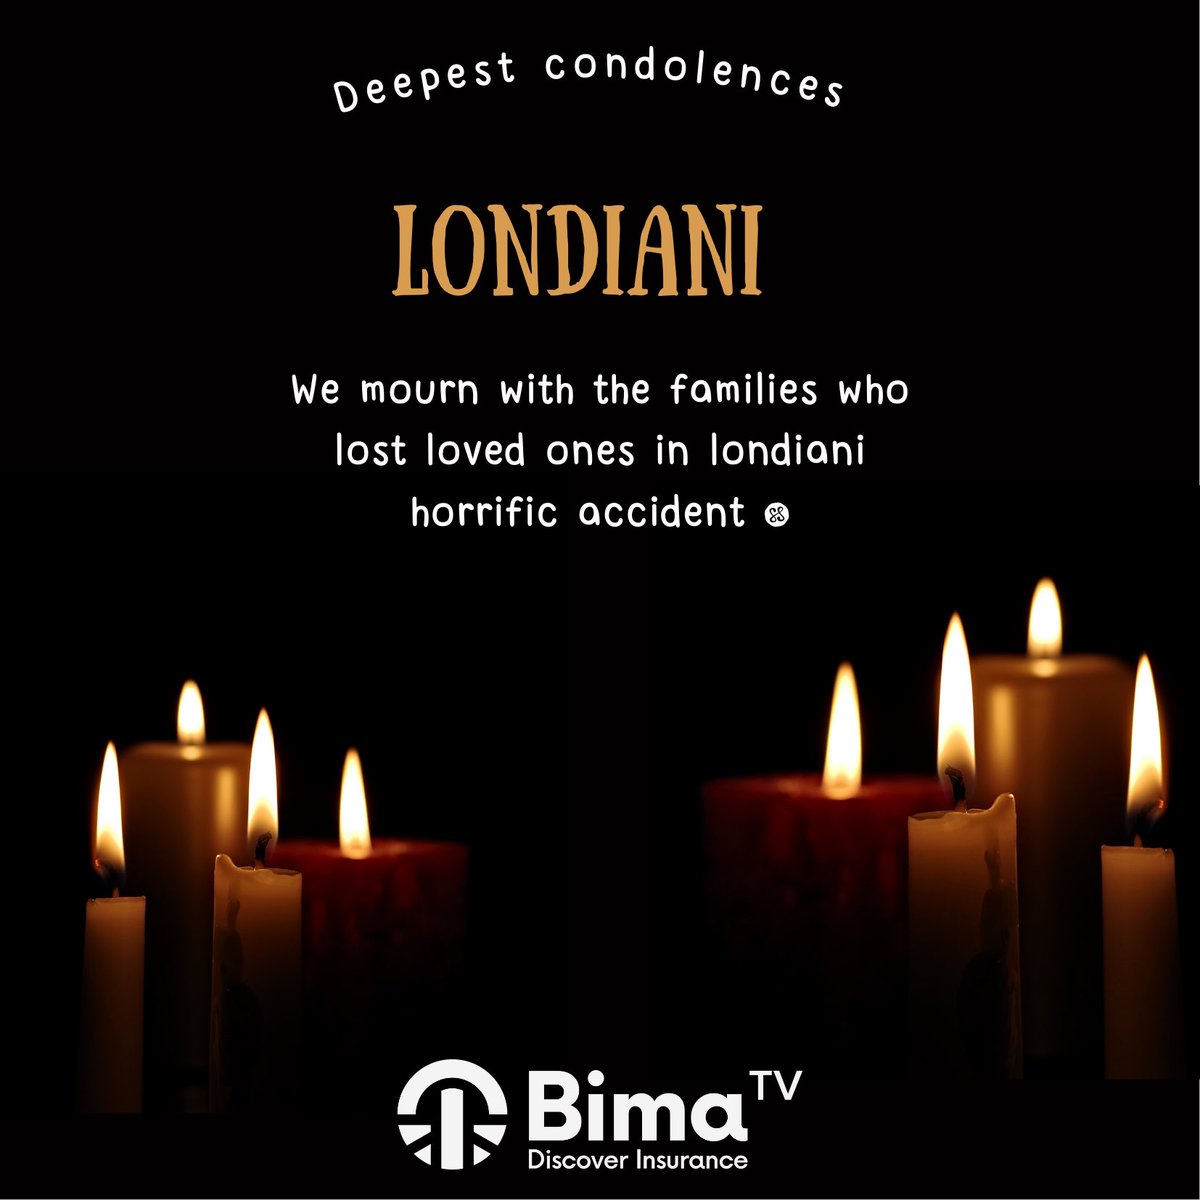 Our heartfelt condolences 💐 

#Londiani #stayinsured